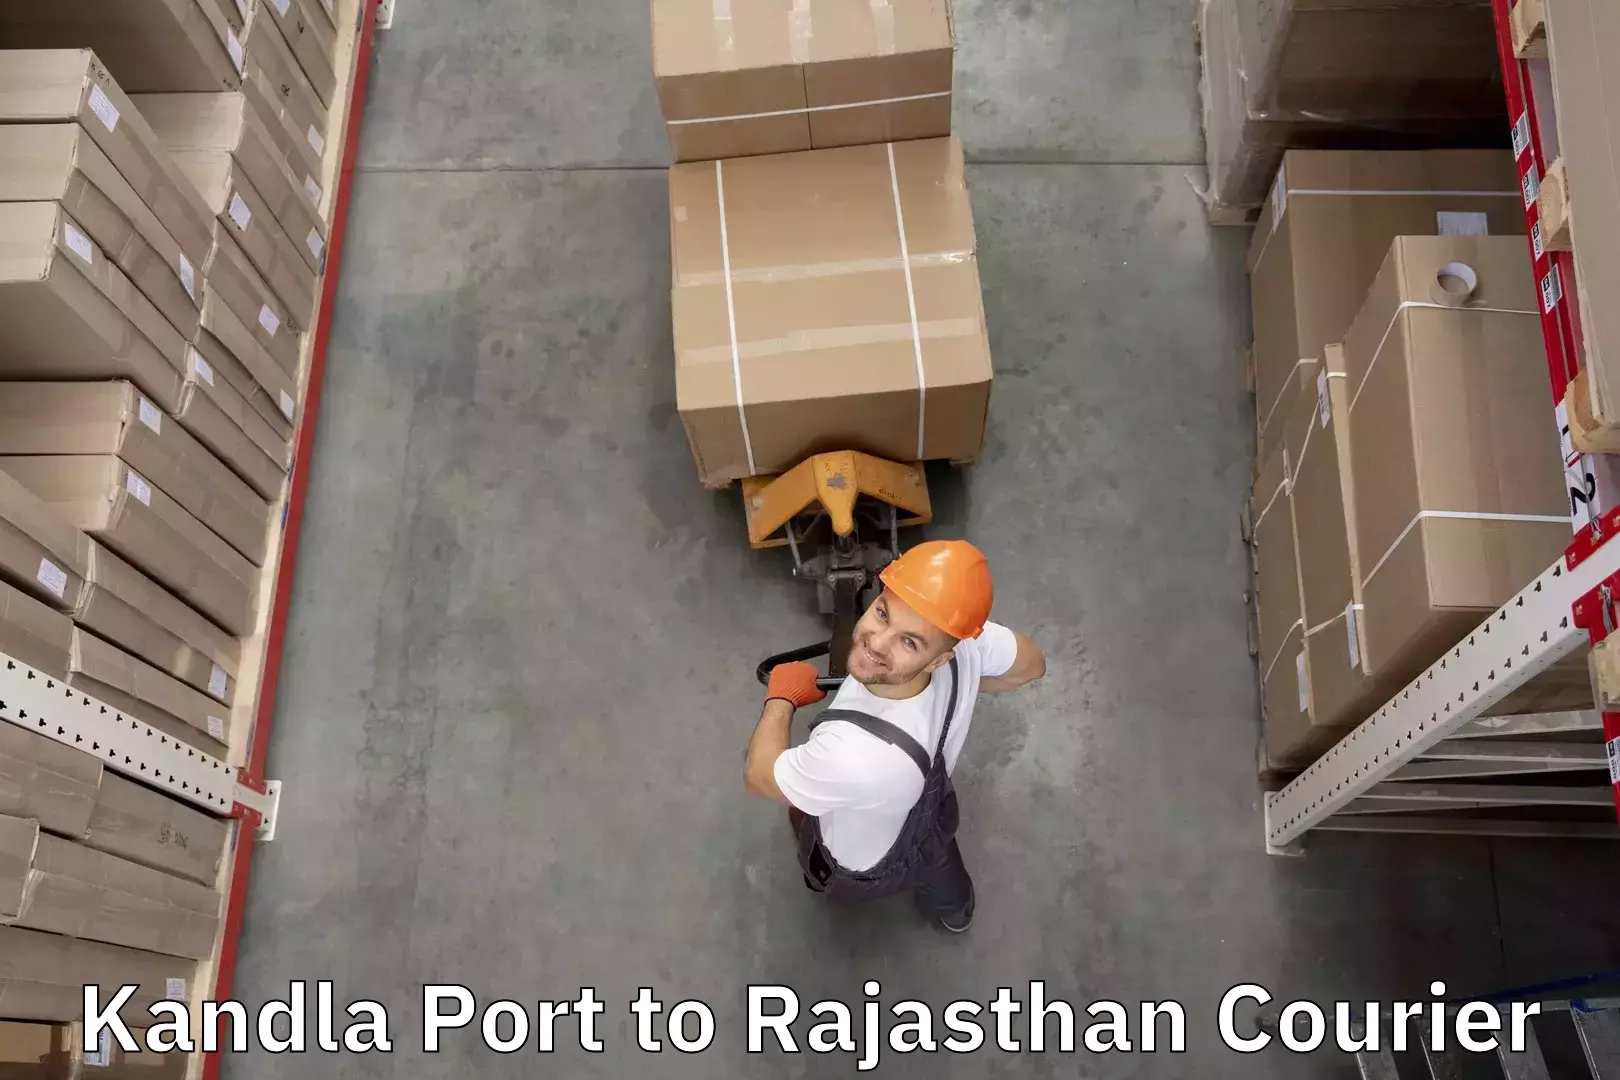 Luggage shipment tracking in Kandla Port to Chirawa